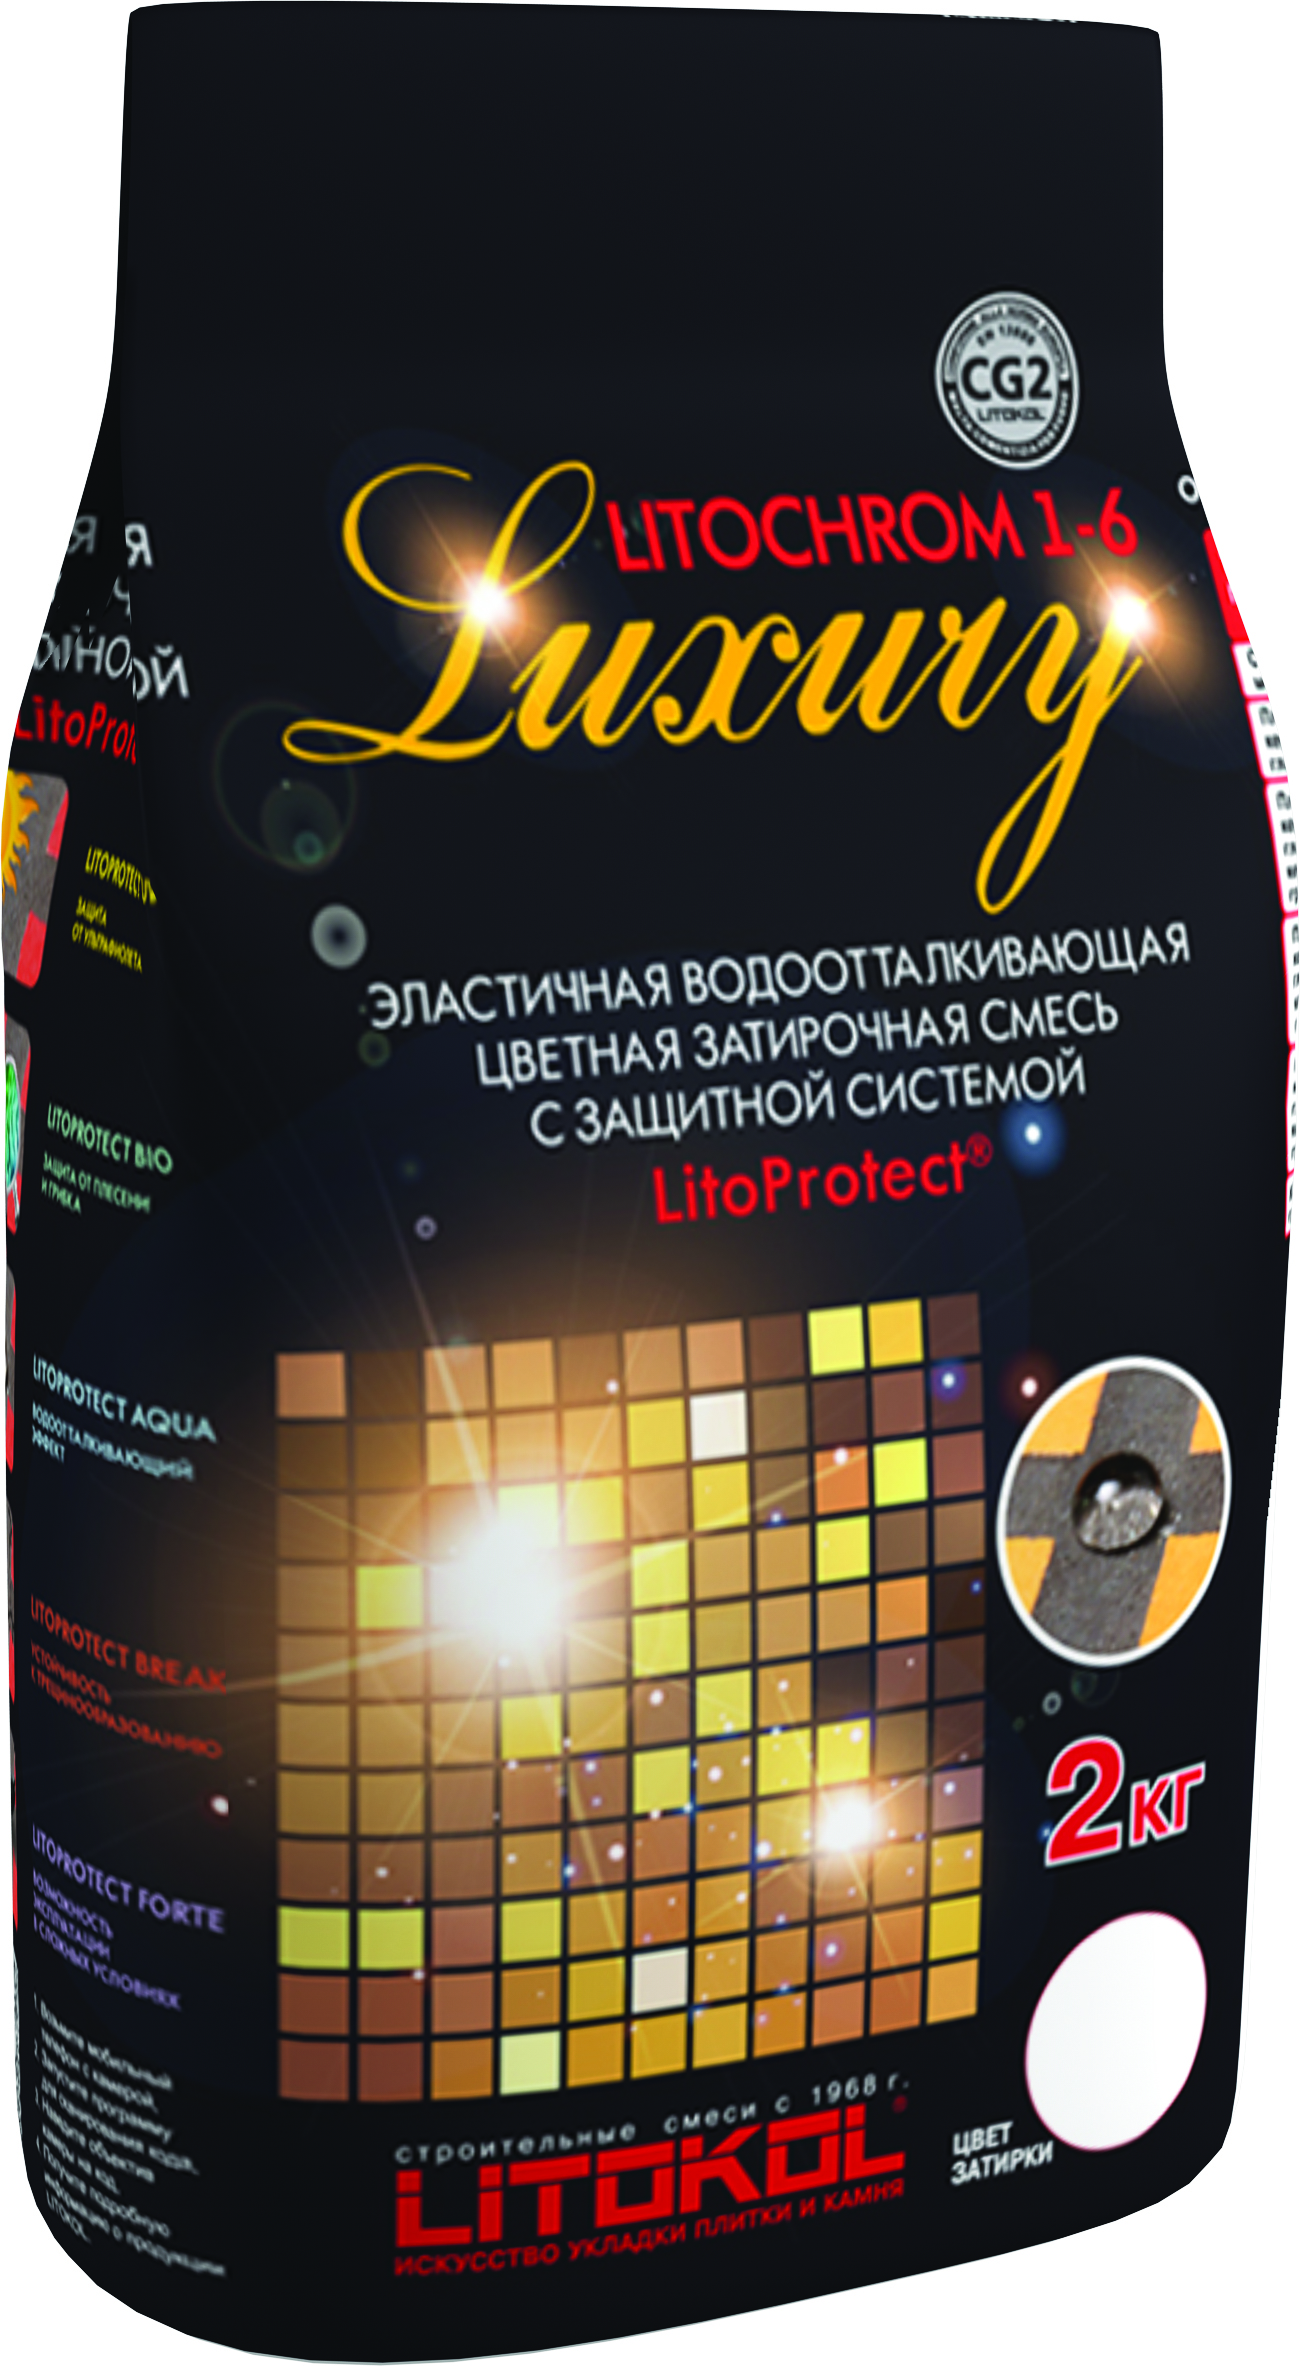 Купить Litokol Litochrom 1-6 Luxury C.330, 2 кг